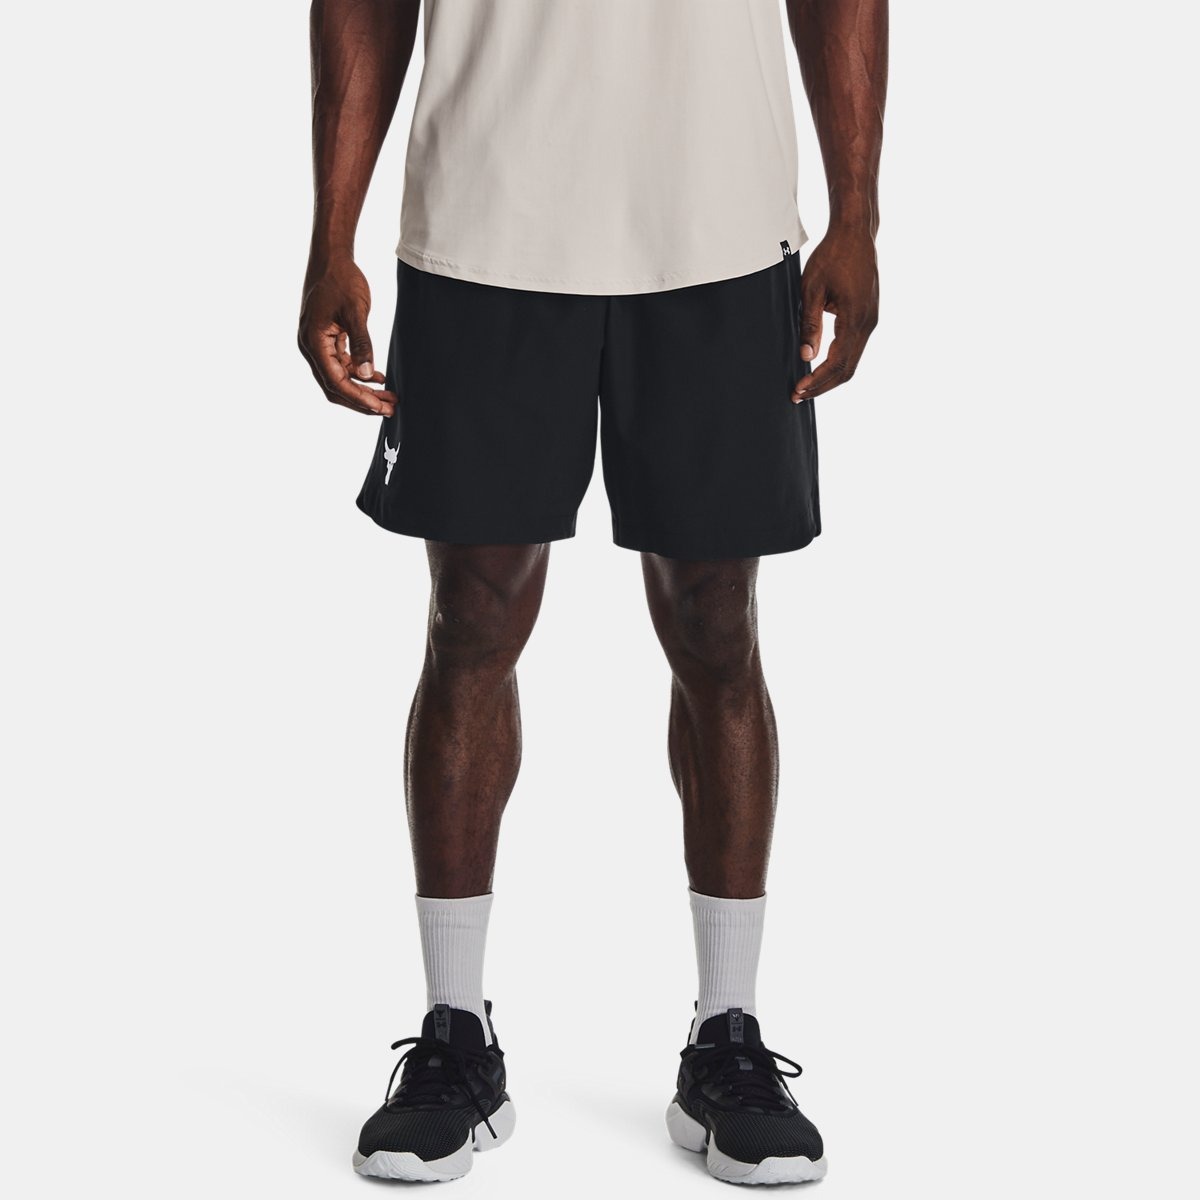 Under Armour - Black - Man Shorts GOOFASH